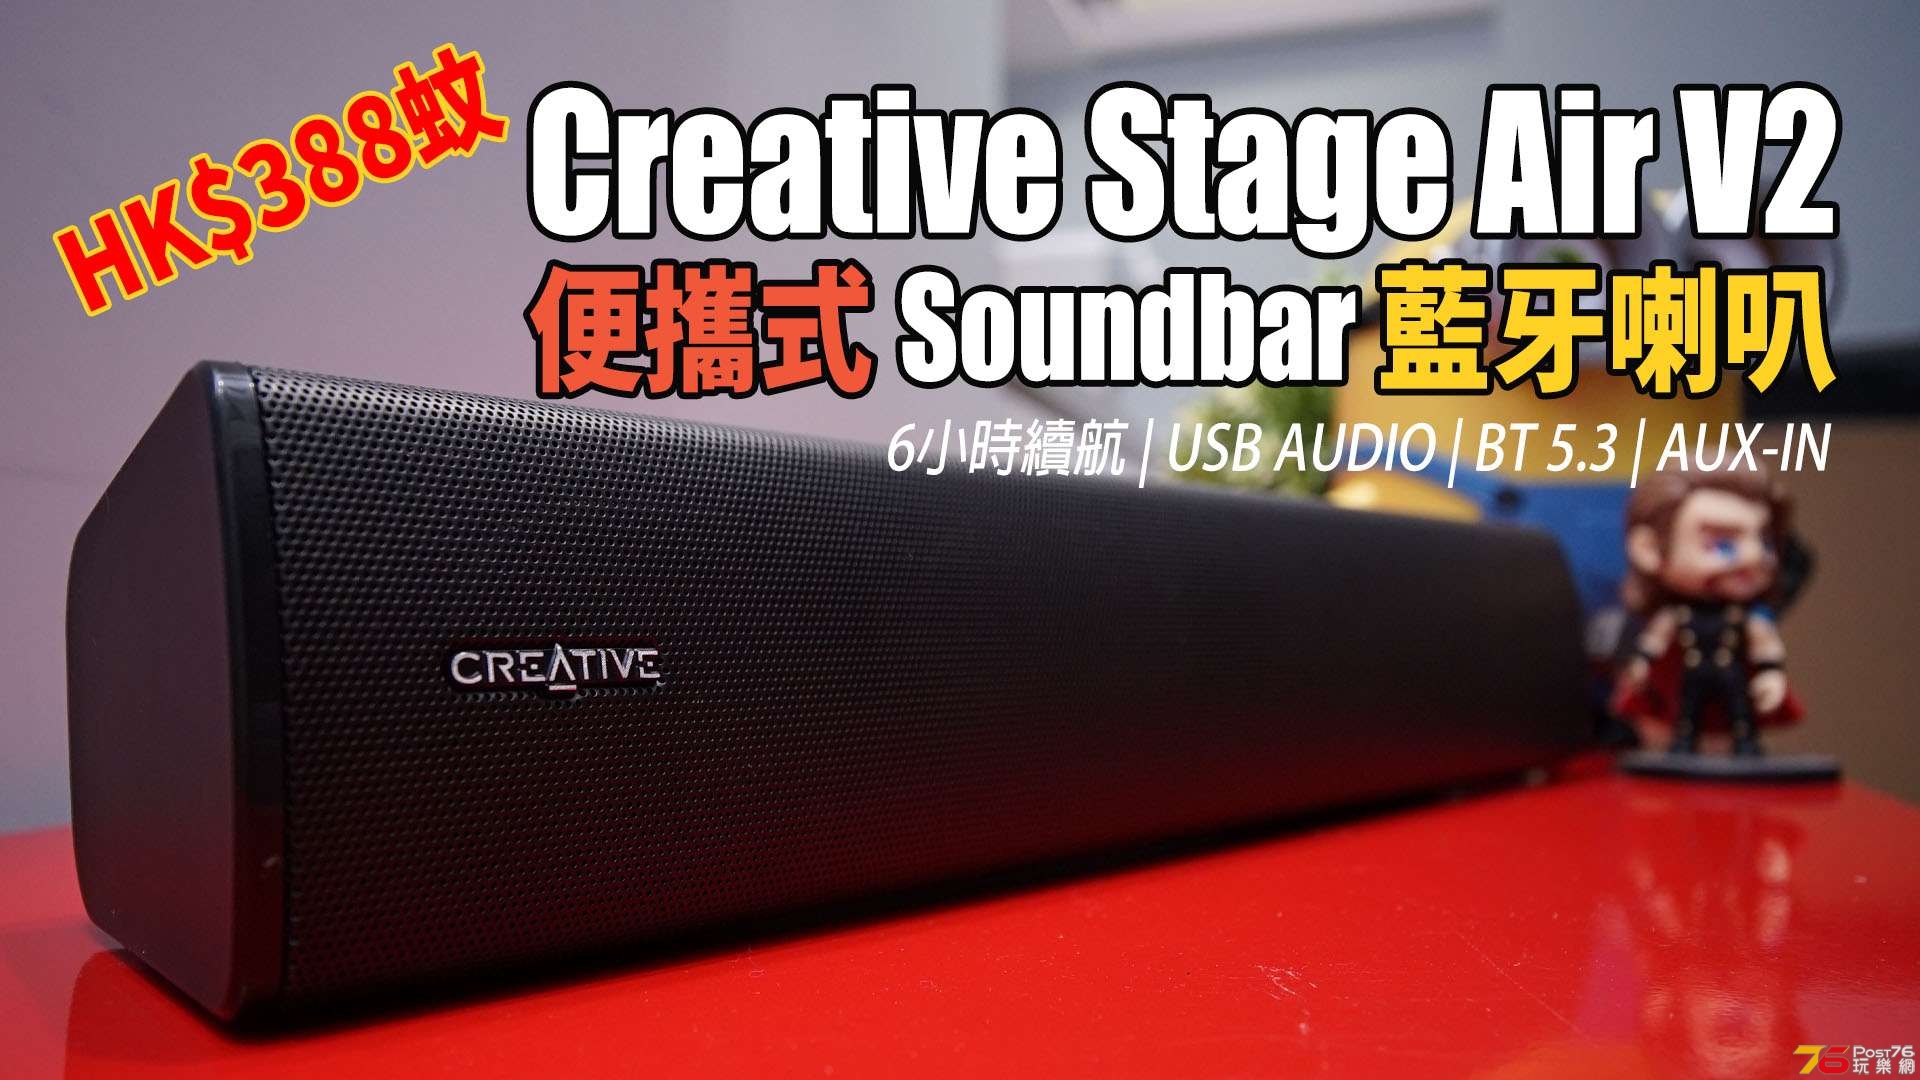 Creative Stage Air V2 Soundbar review forum copy.jpg